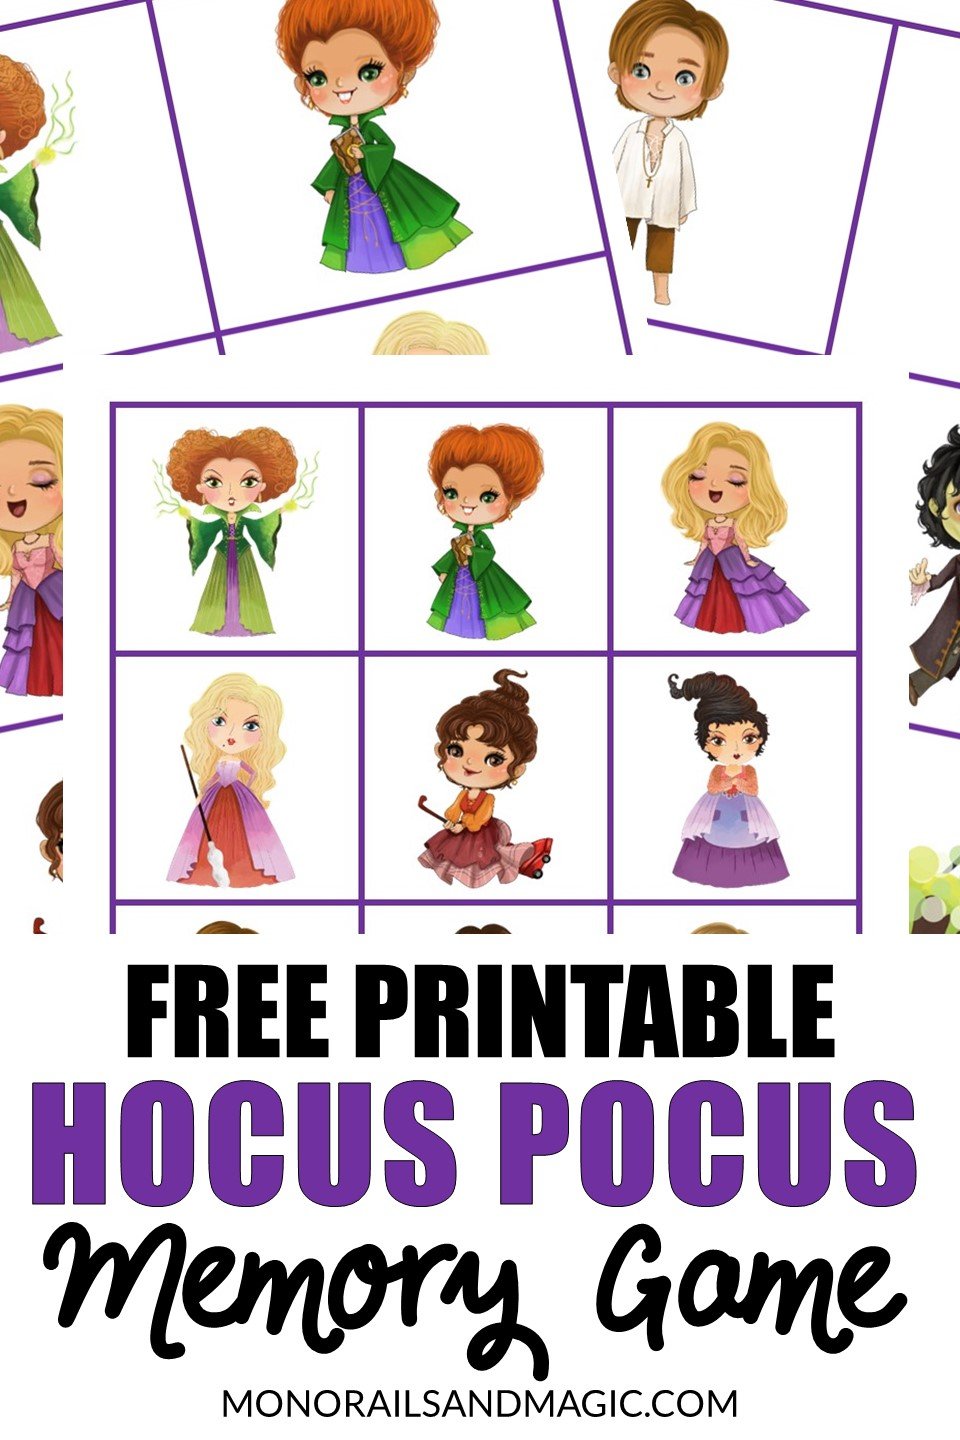 Free printable Hocus Pocus memory game for kids.